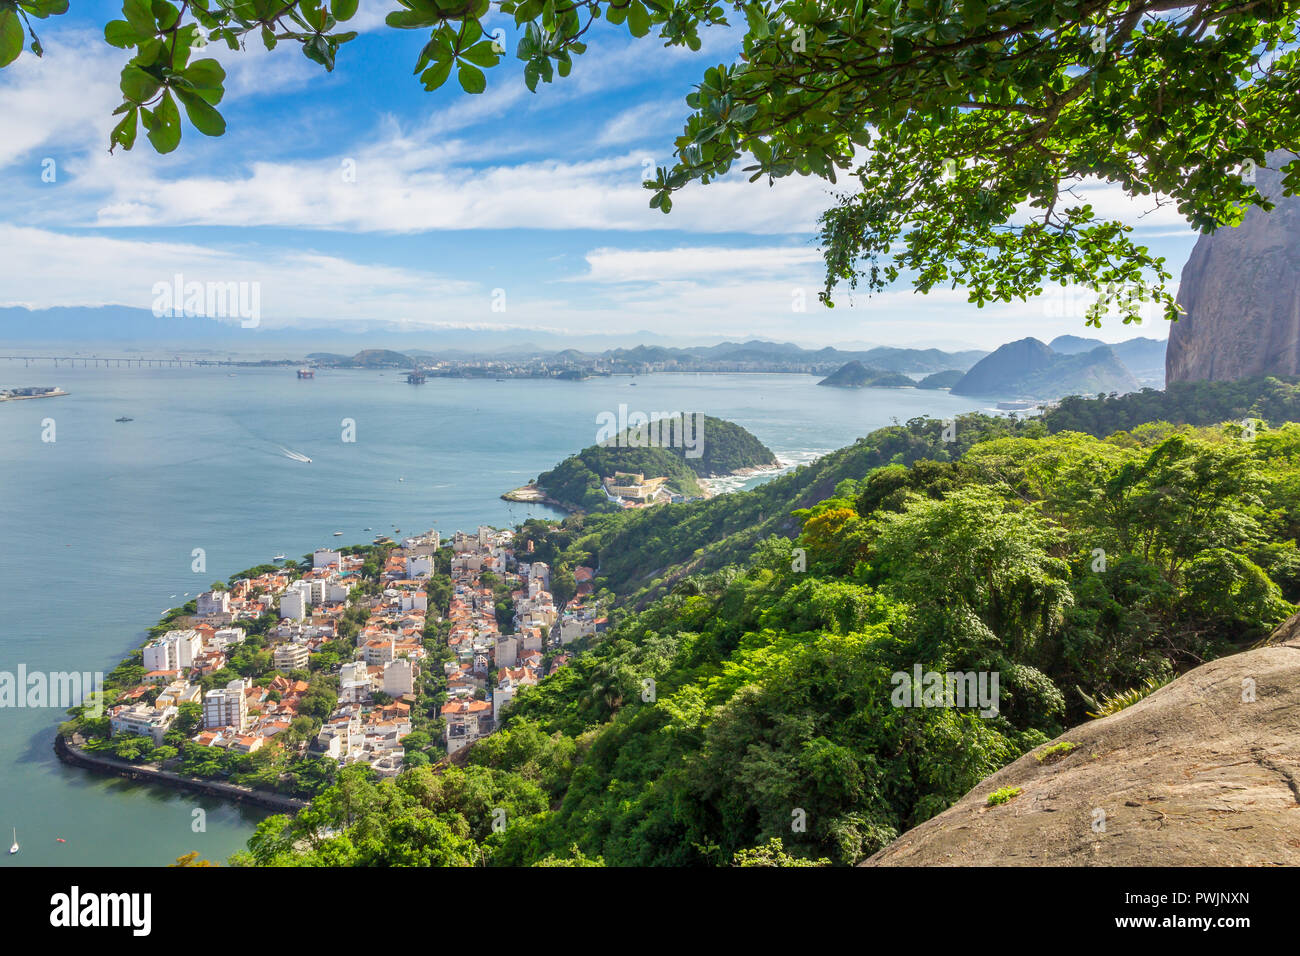 View from the Sugarloaf Mountain down to Urca Neighborhood, Rio de Janeiro, Brazil, South America Stock Photo